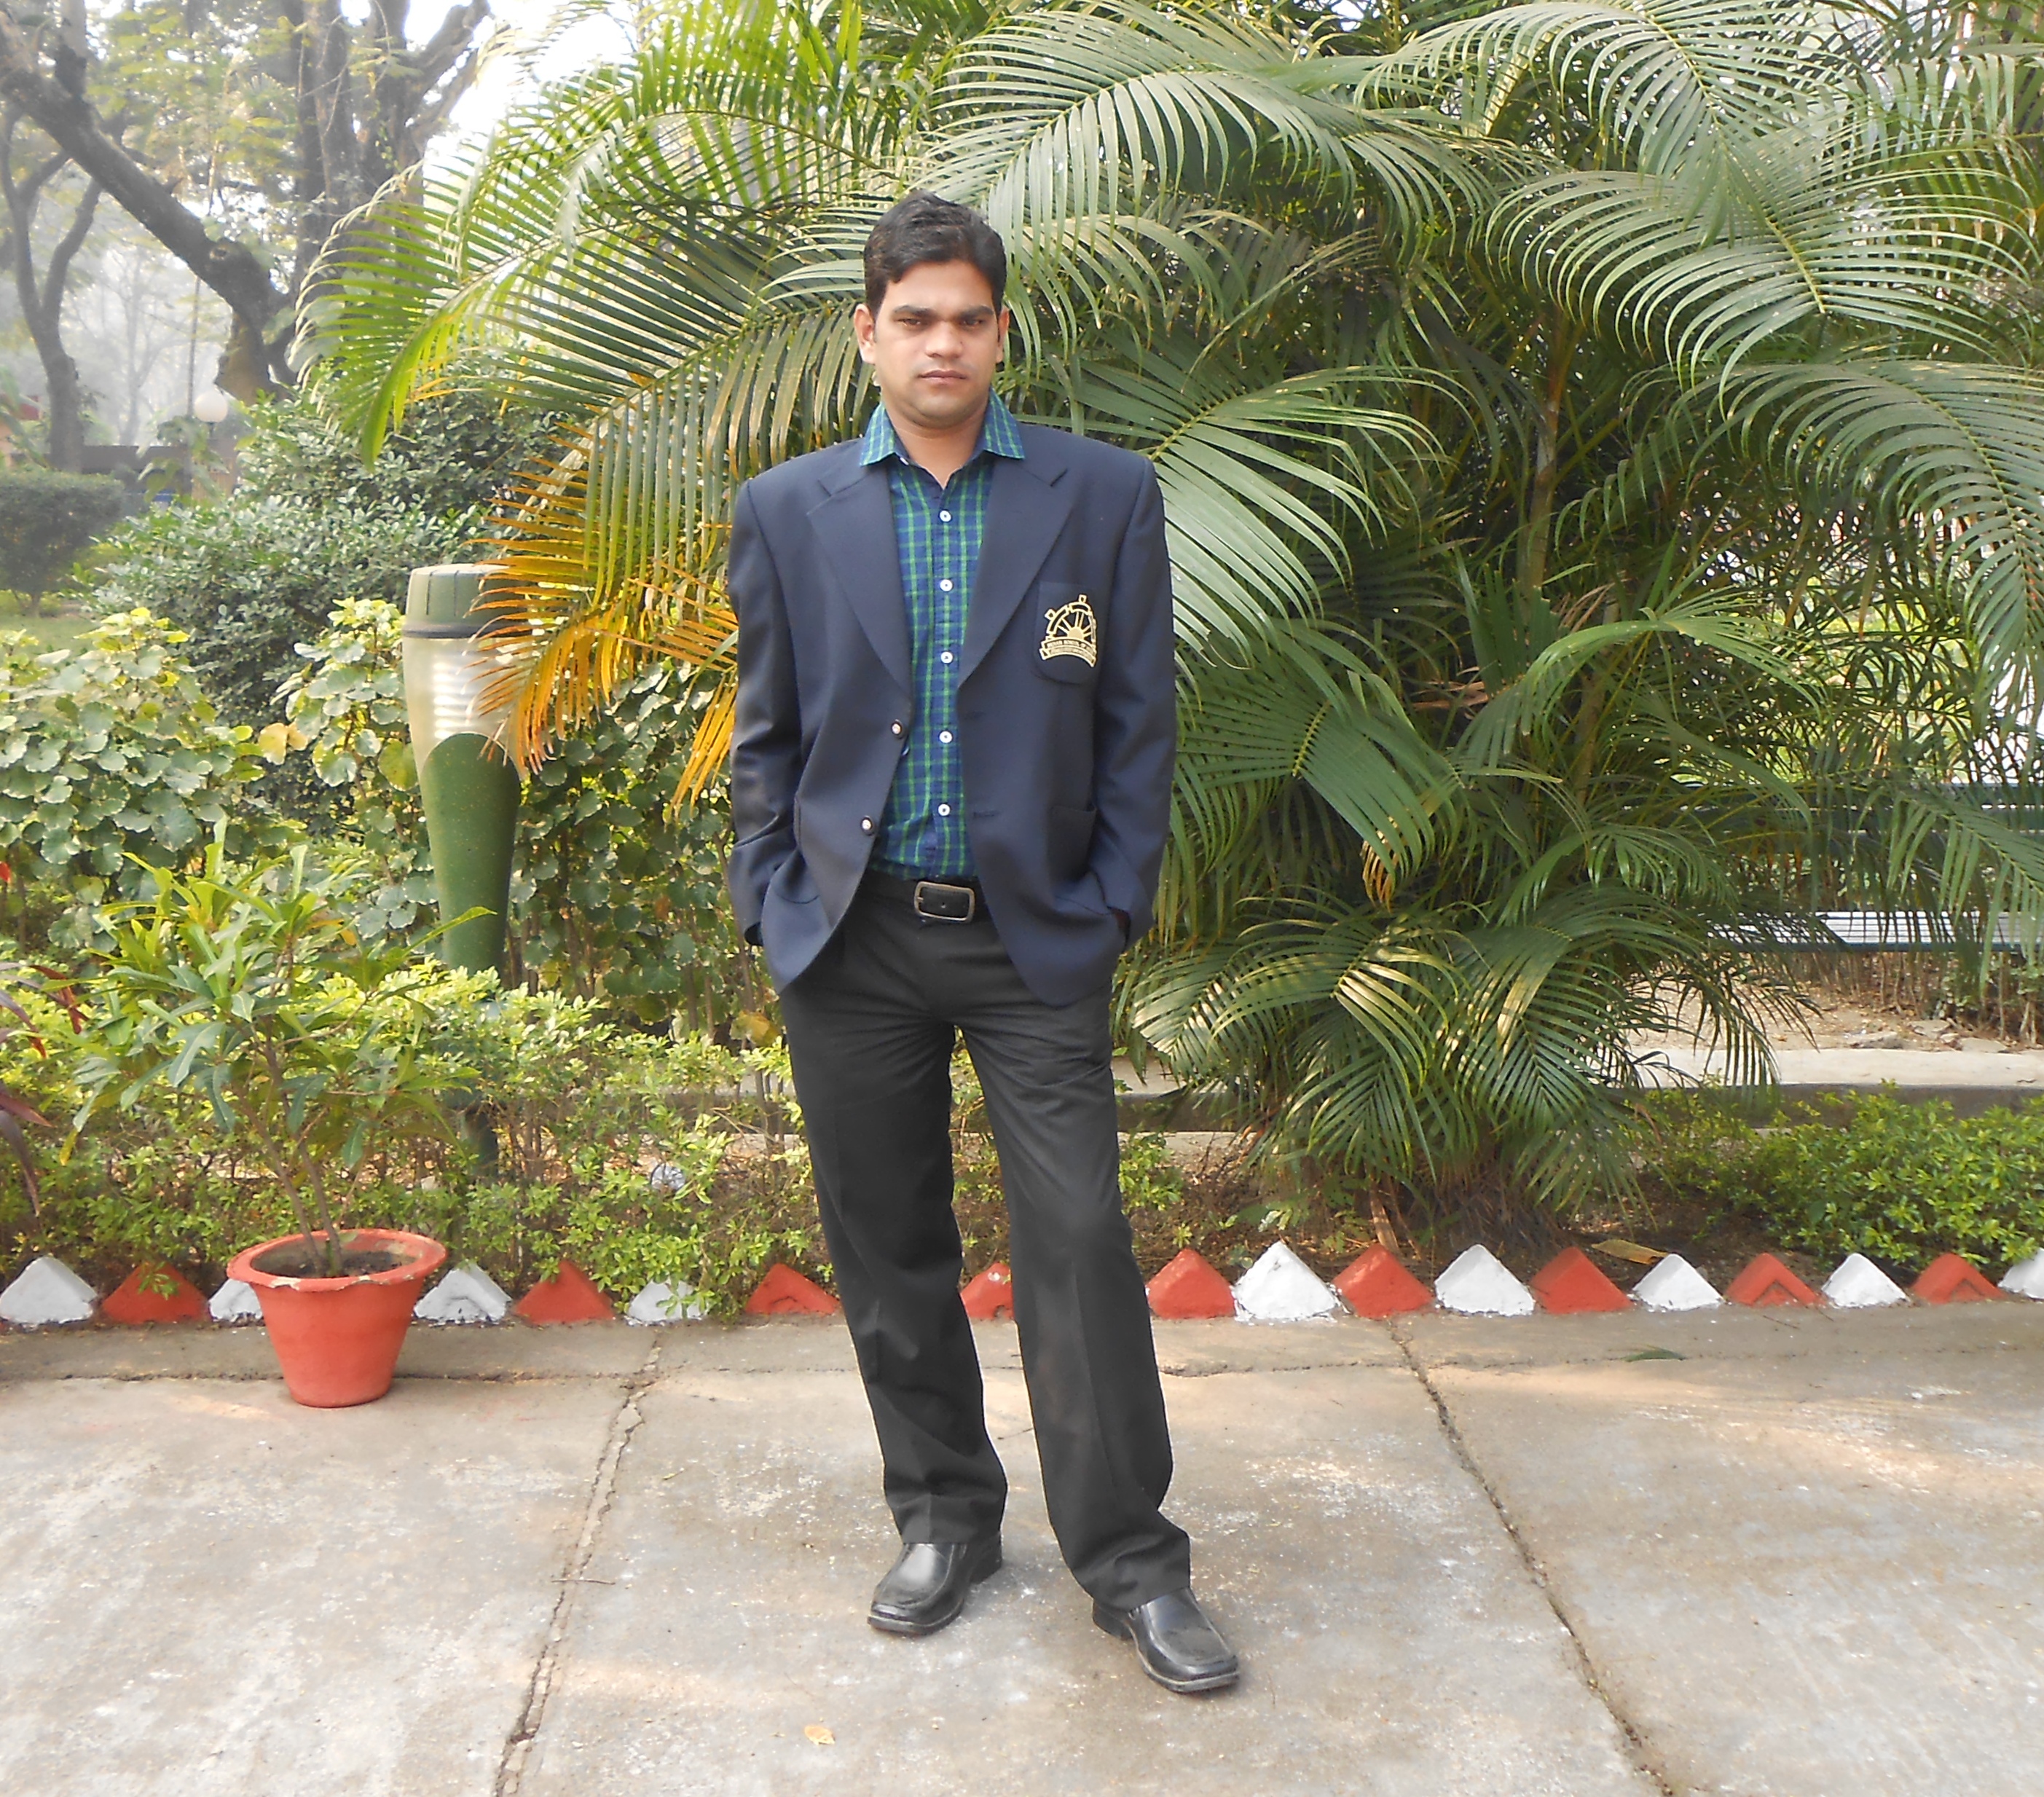 binay panigrahy, Indian school of Mines - Research scholar